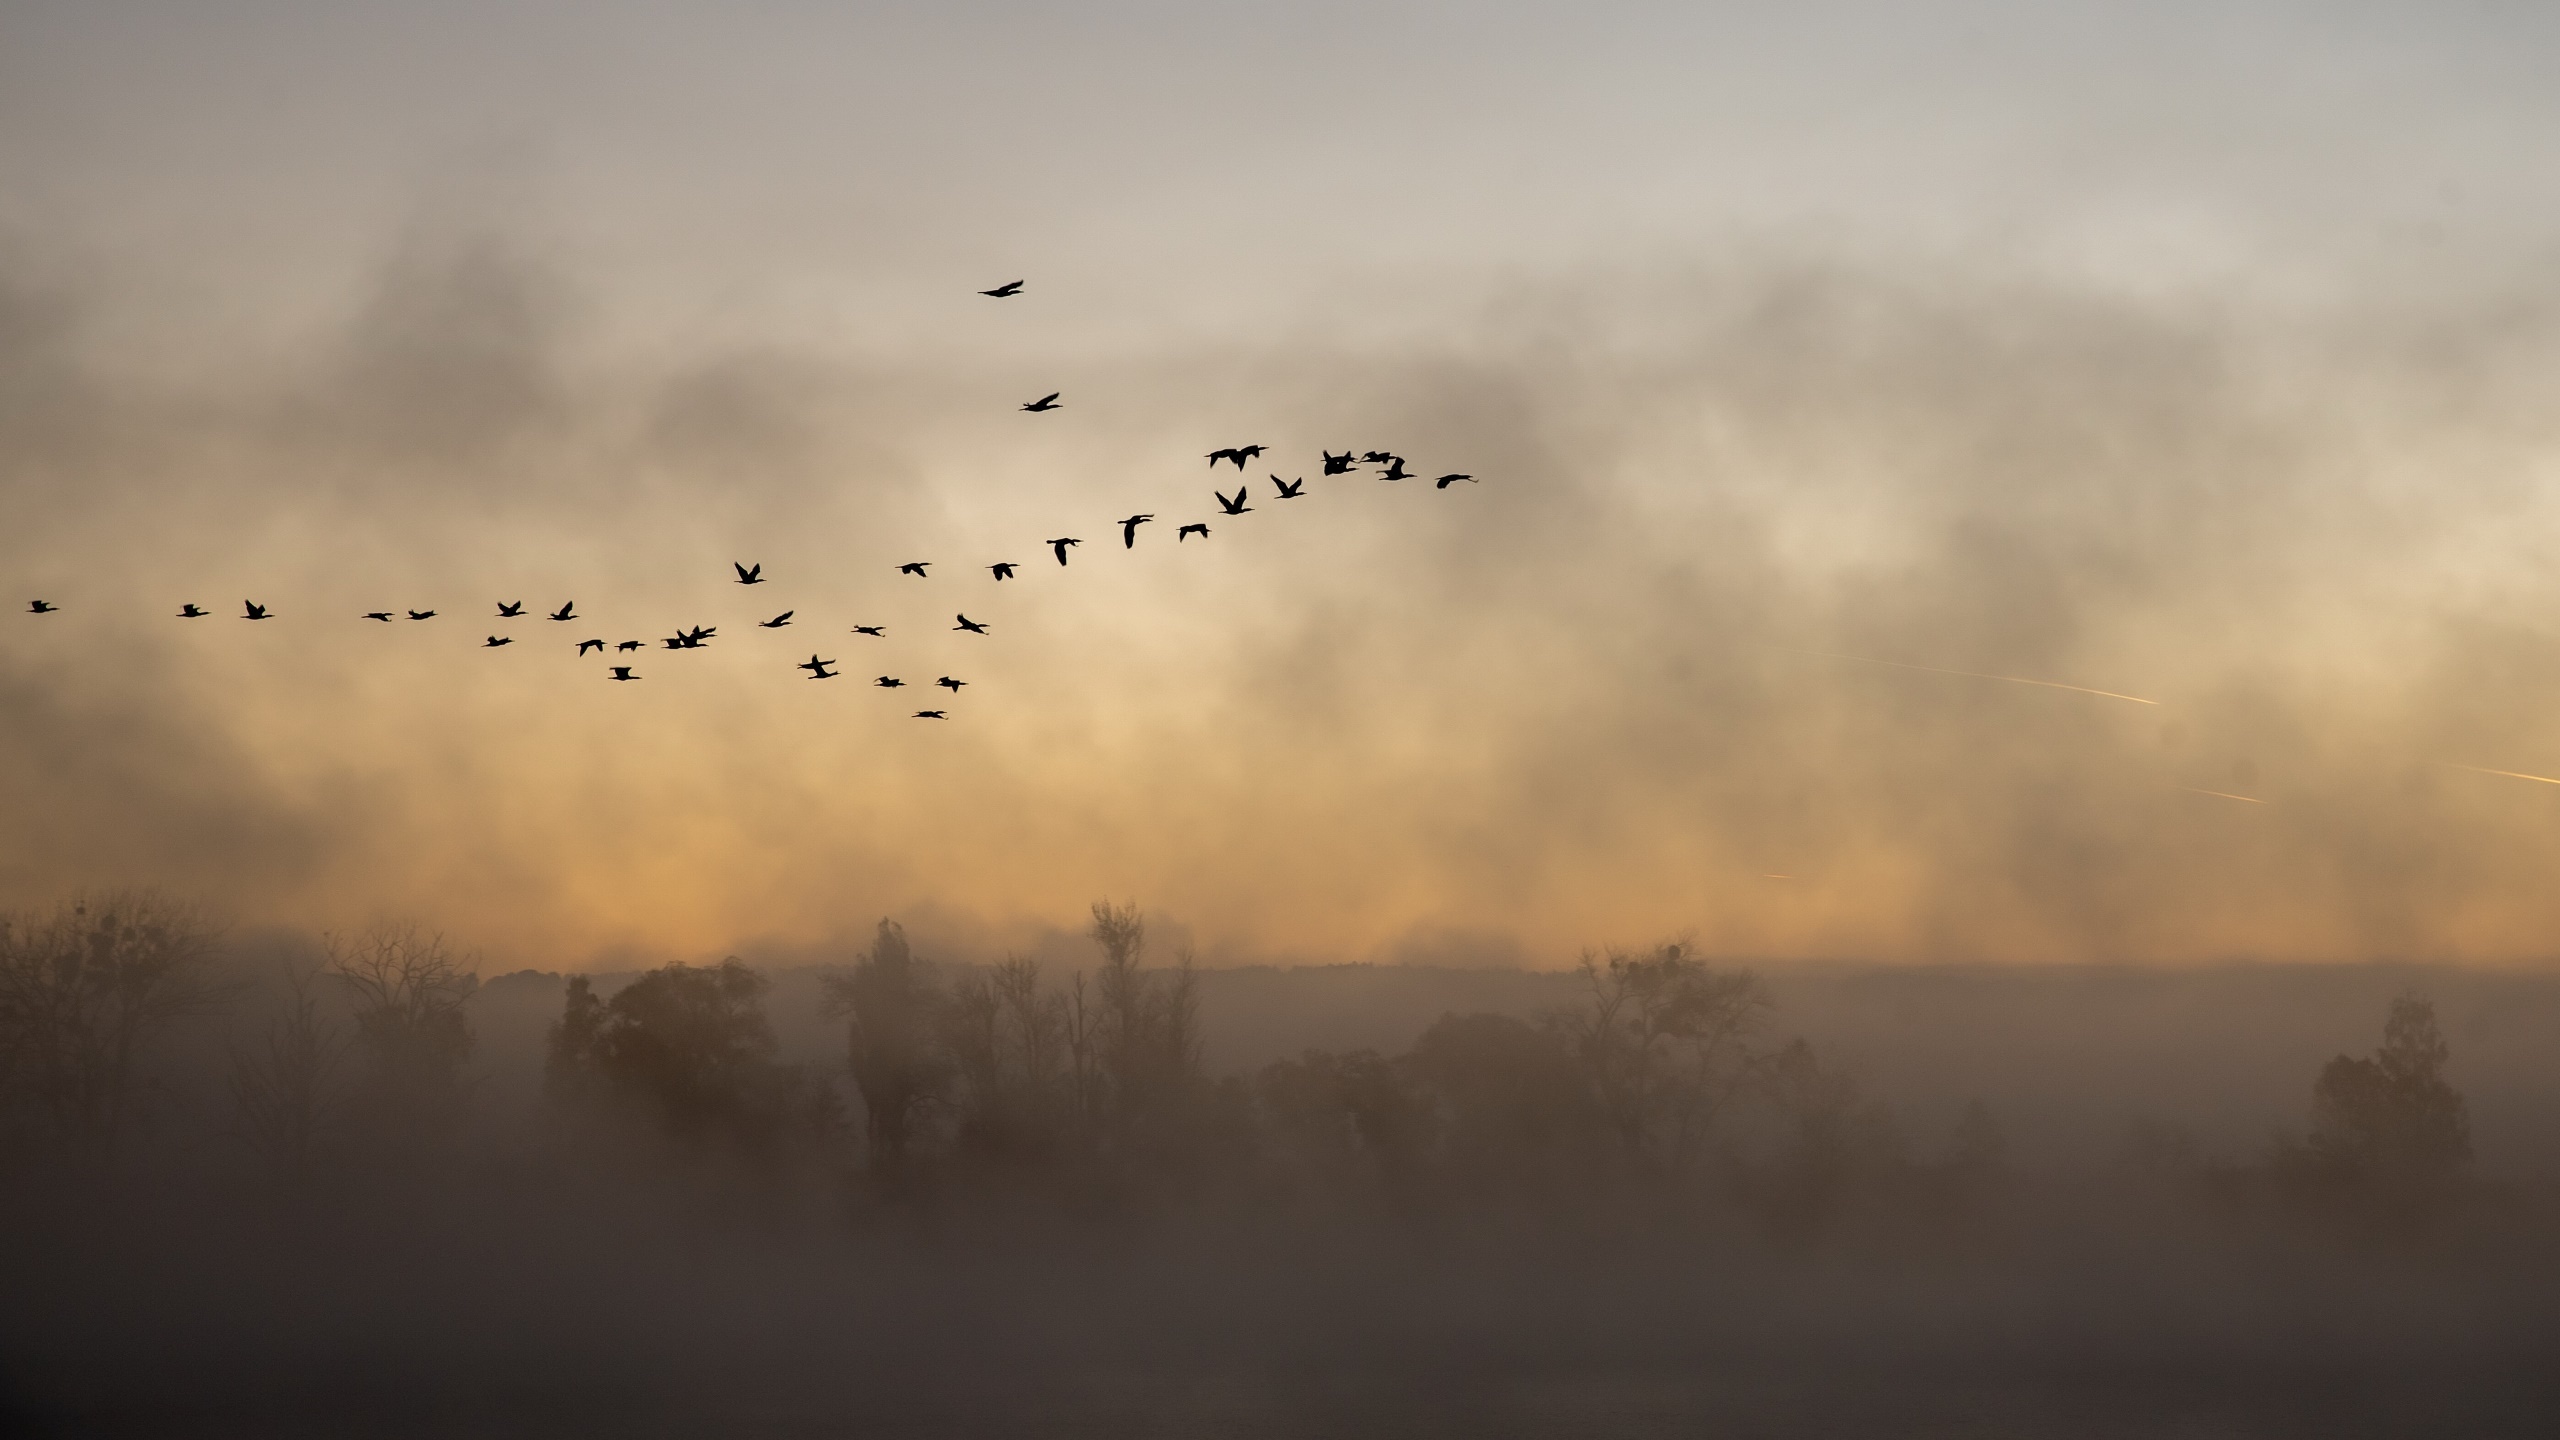 General 2560x1440 mist birds flying outdoors landscape animals nature